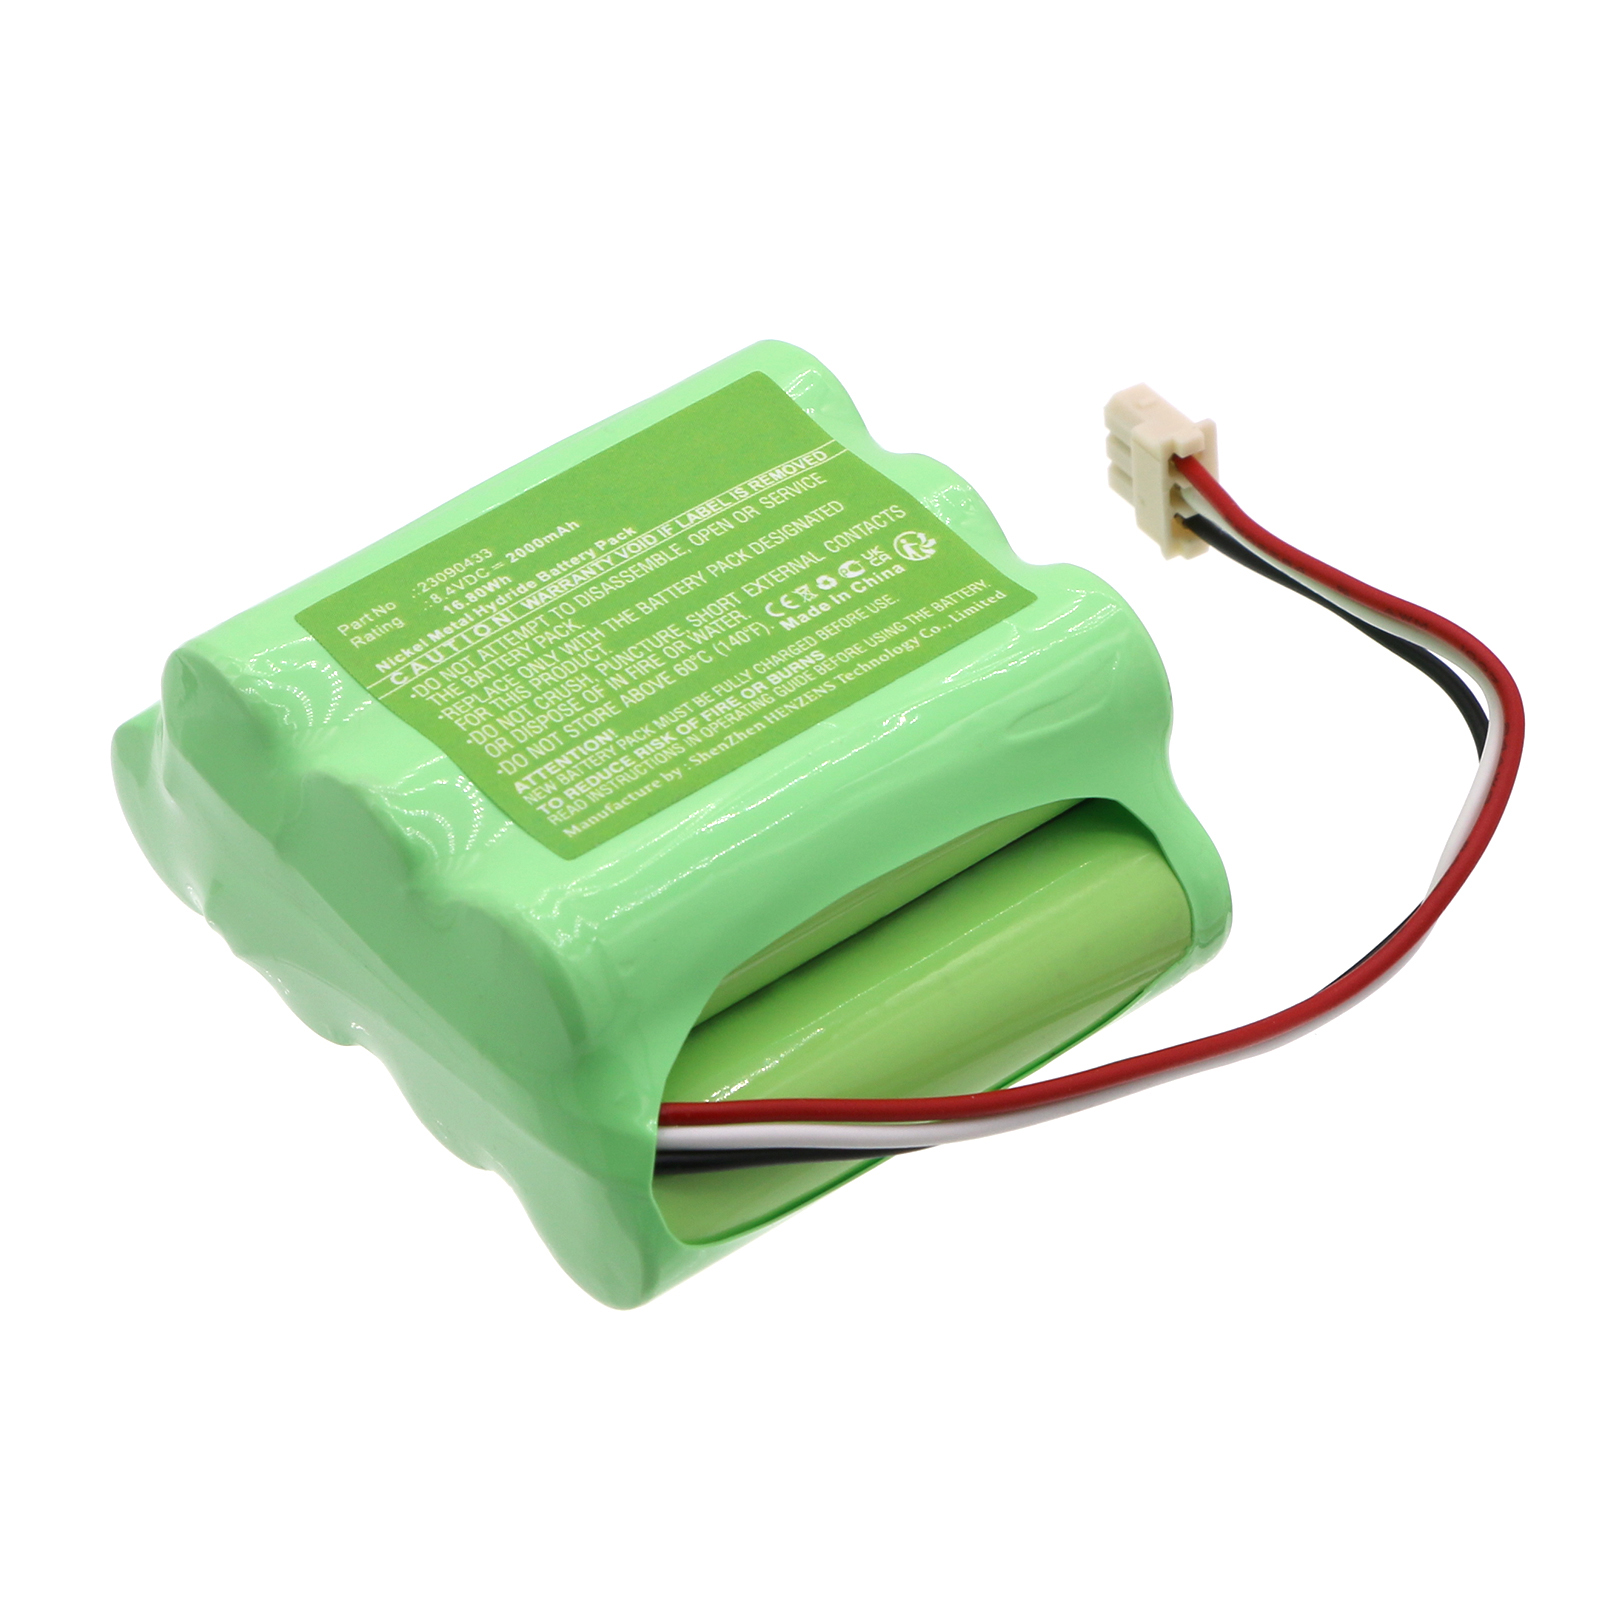 Synergy Digital Alarm System Battery, Compatible with AP 23090433 Alarm System Battery (Ni-MH, 8.4V, 2000mAh)